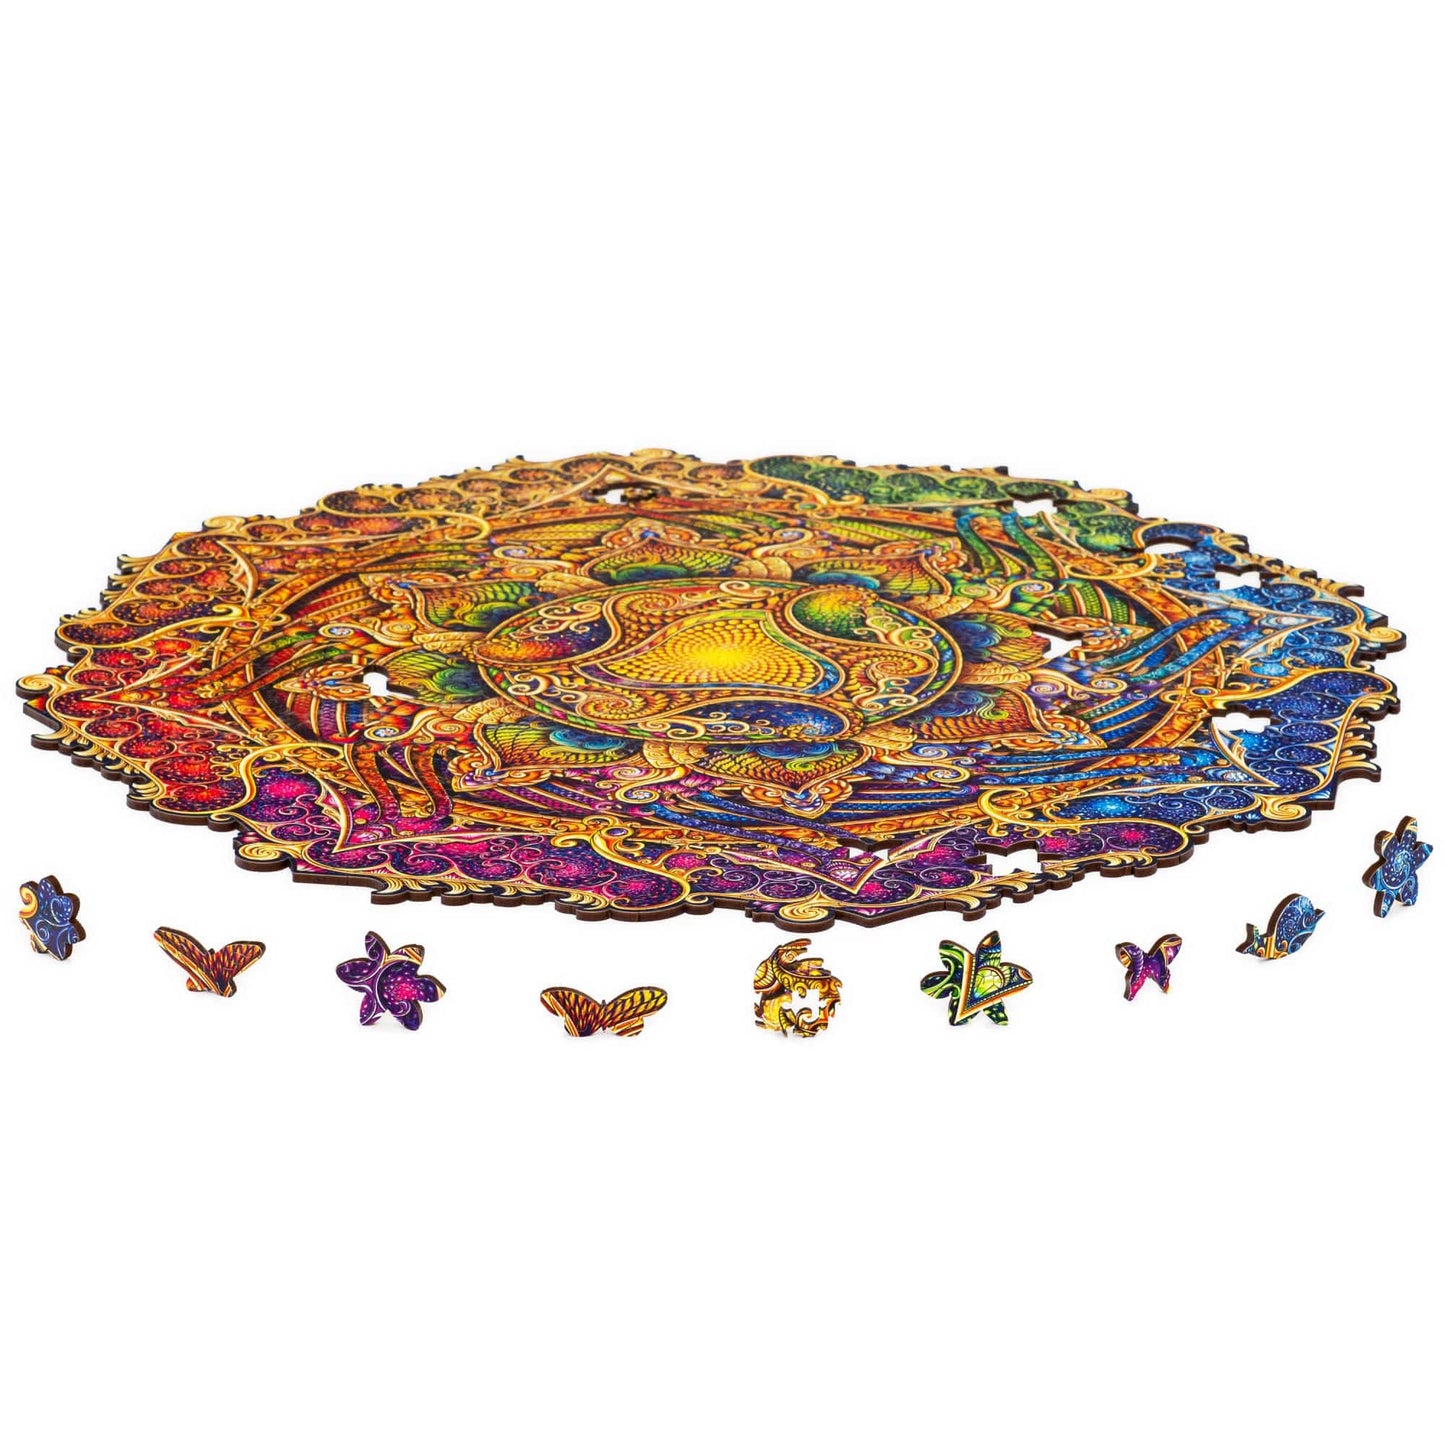 Mandala Inexhaustible Abundance Wooden Puzzle - King Size